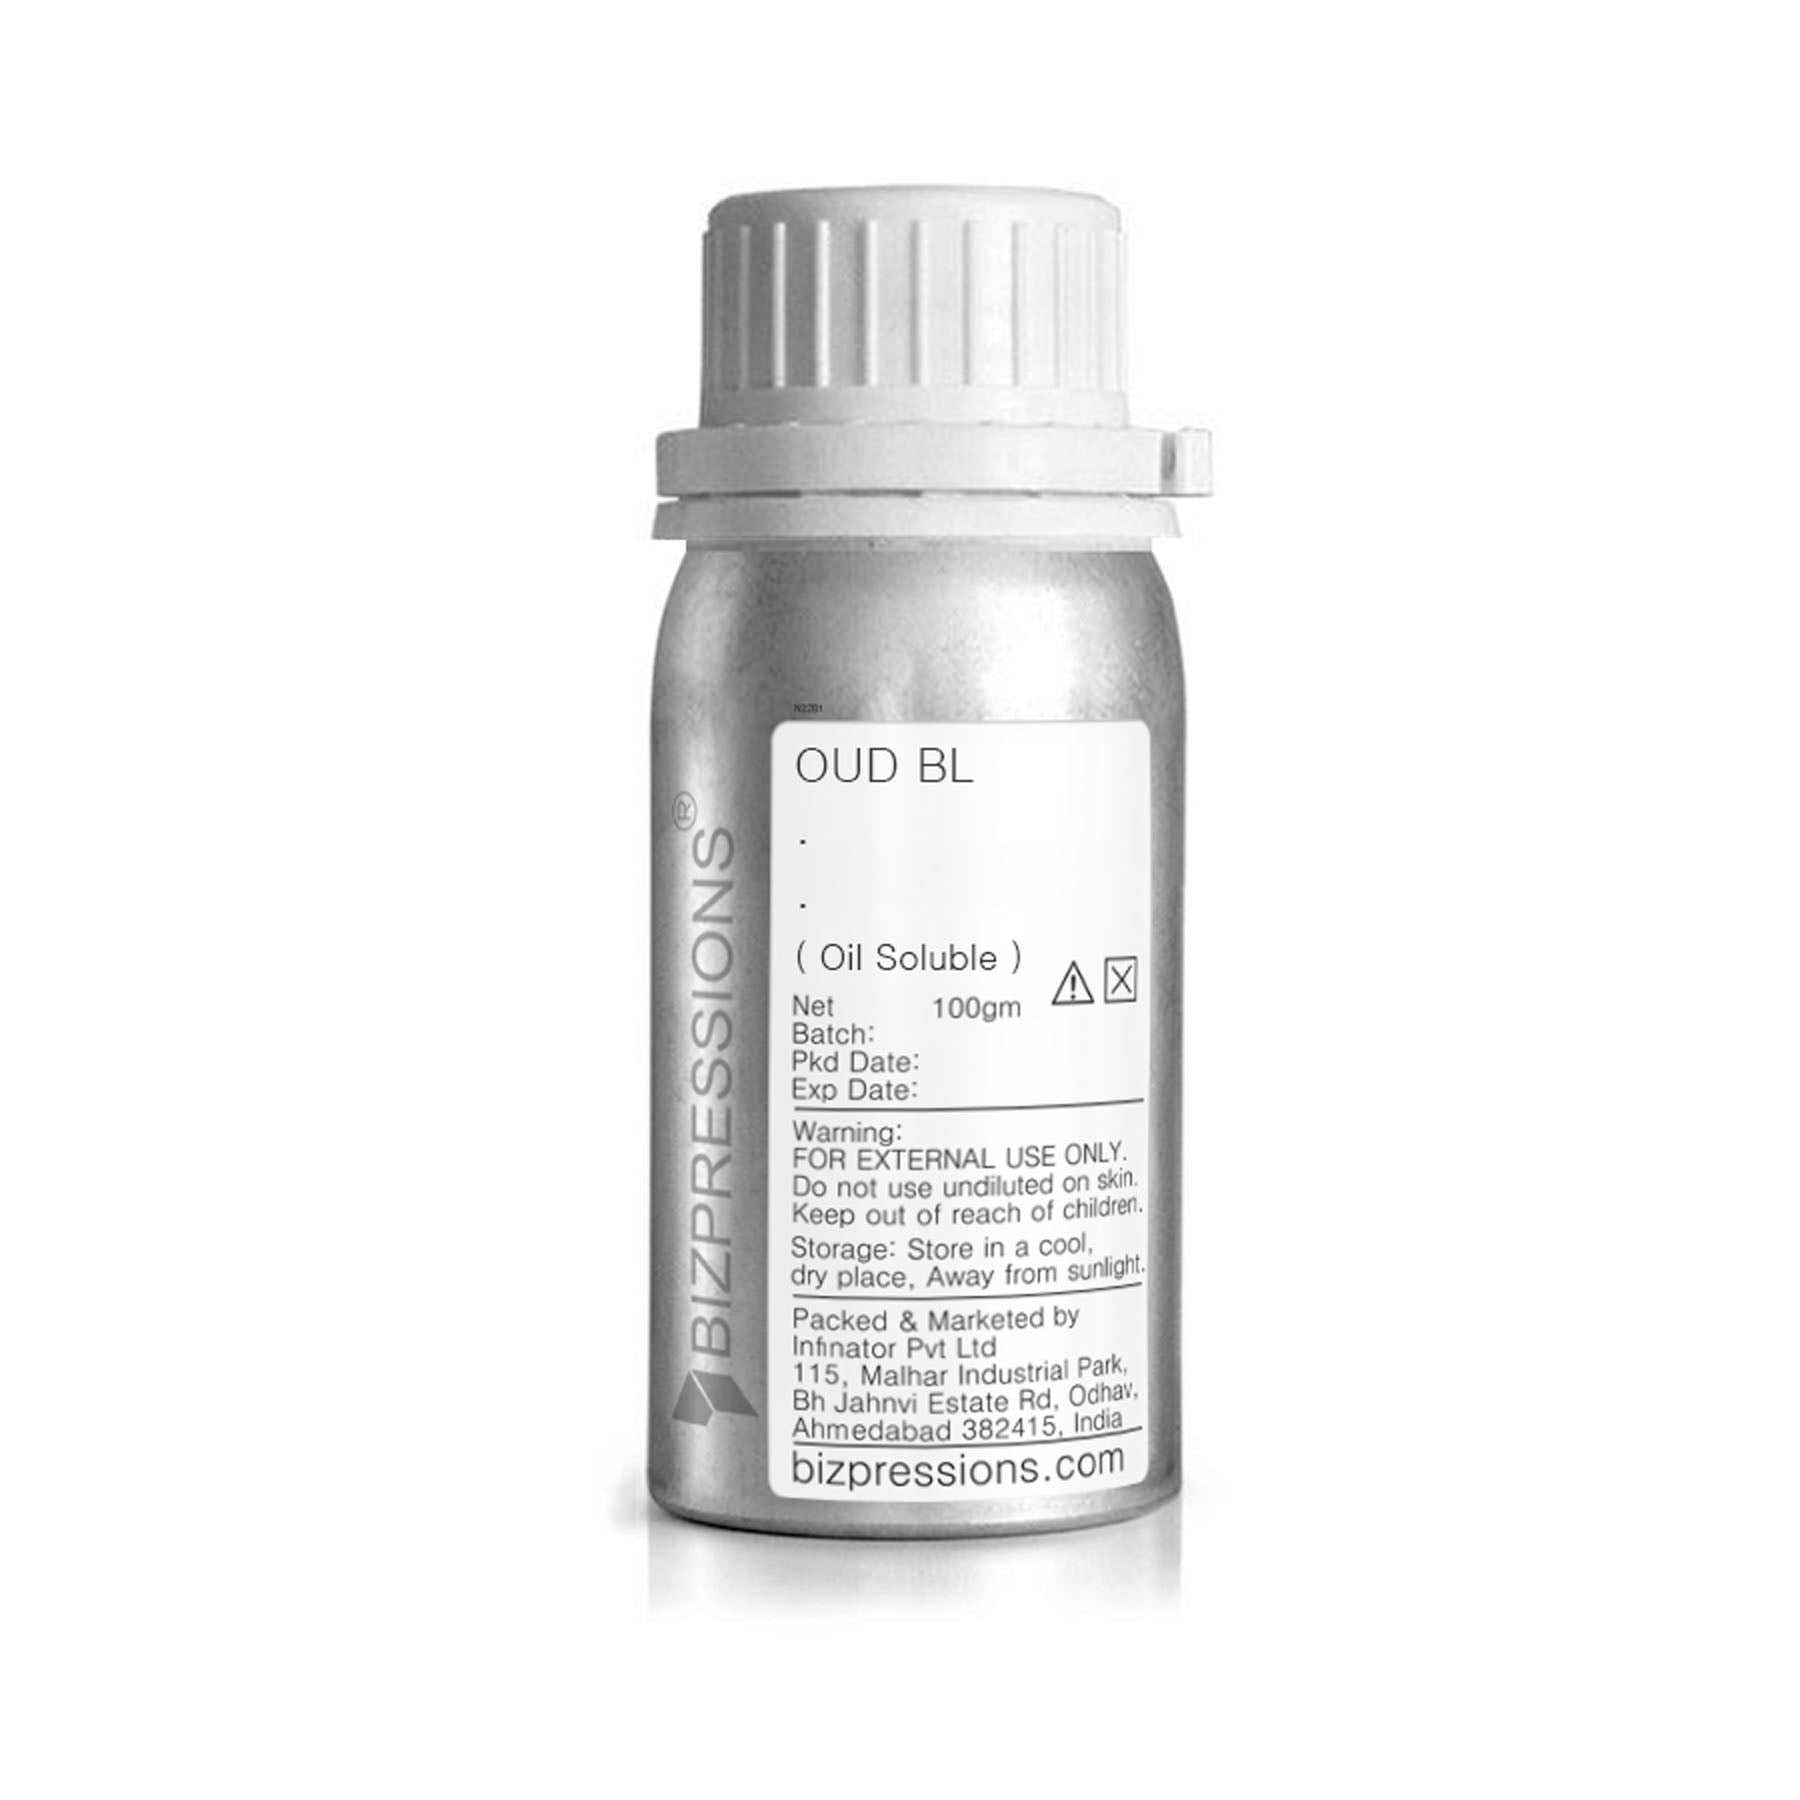 OUD BL - Fragrance ( Oil Soluble ) - 100 gm